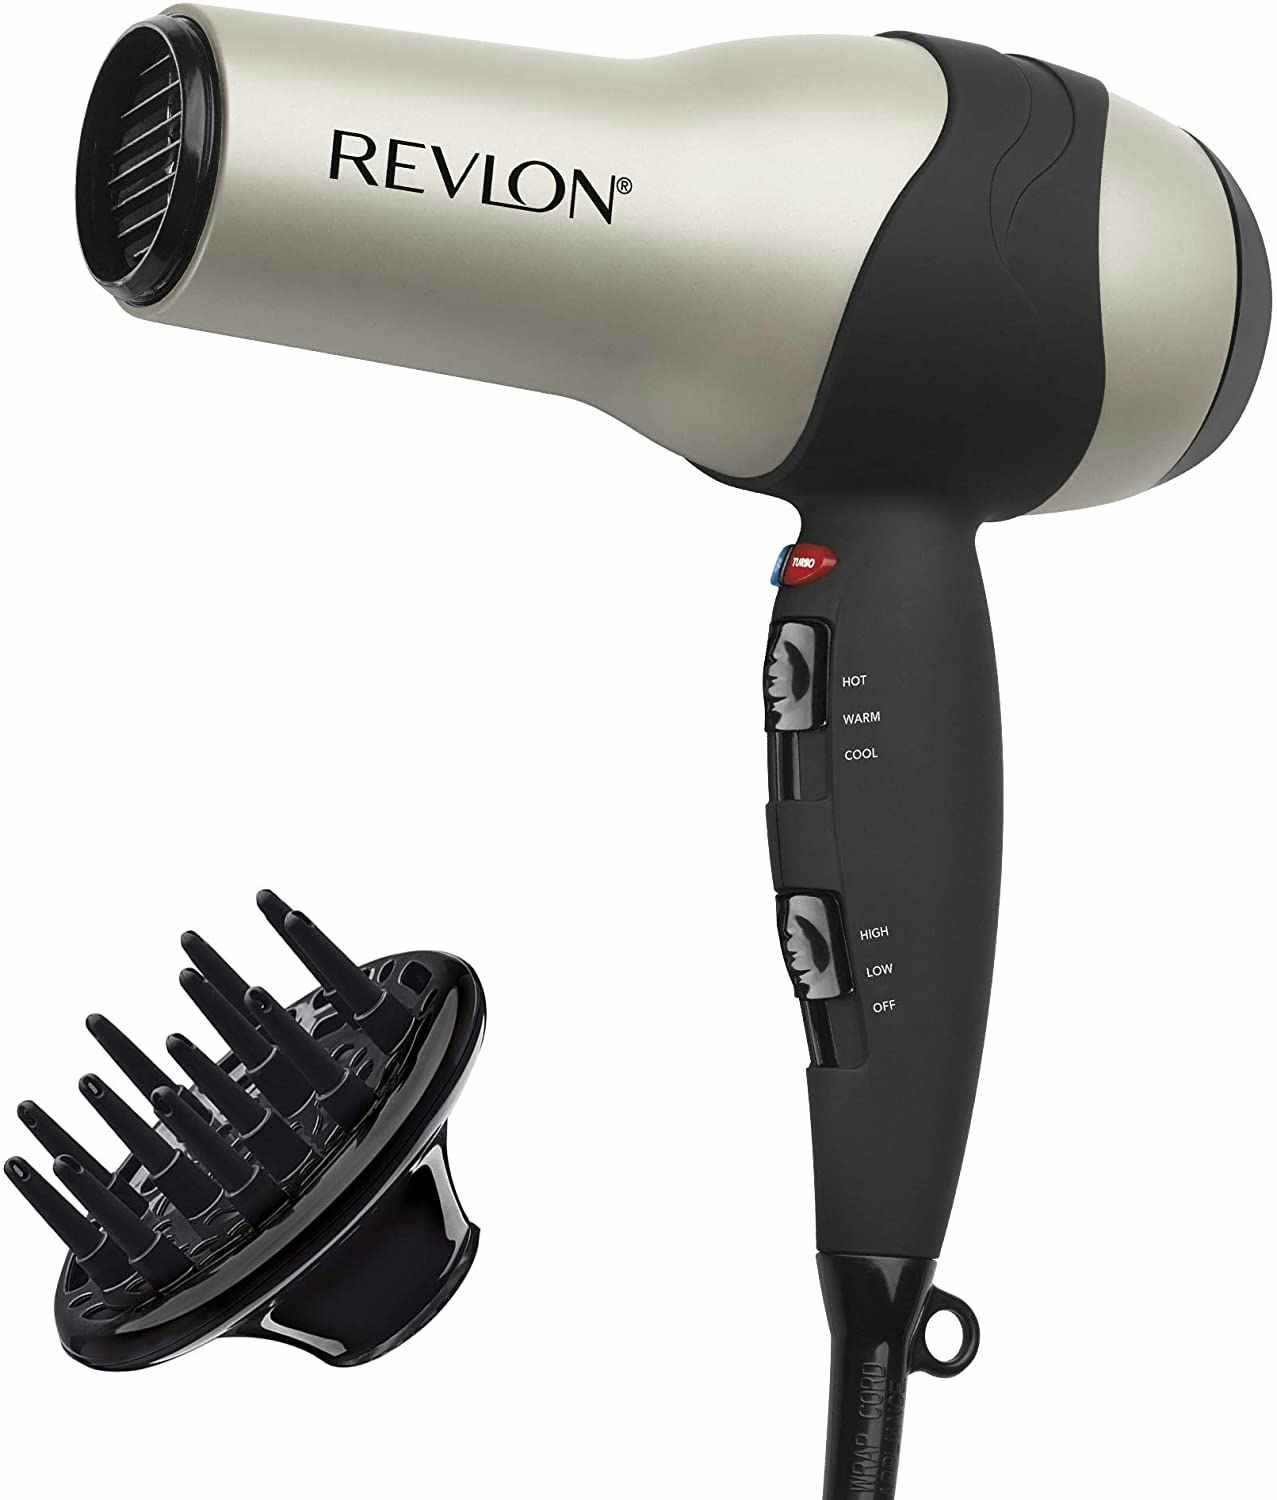 A Revlon hair dryer next to an attachment.